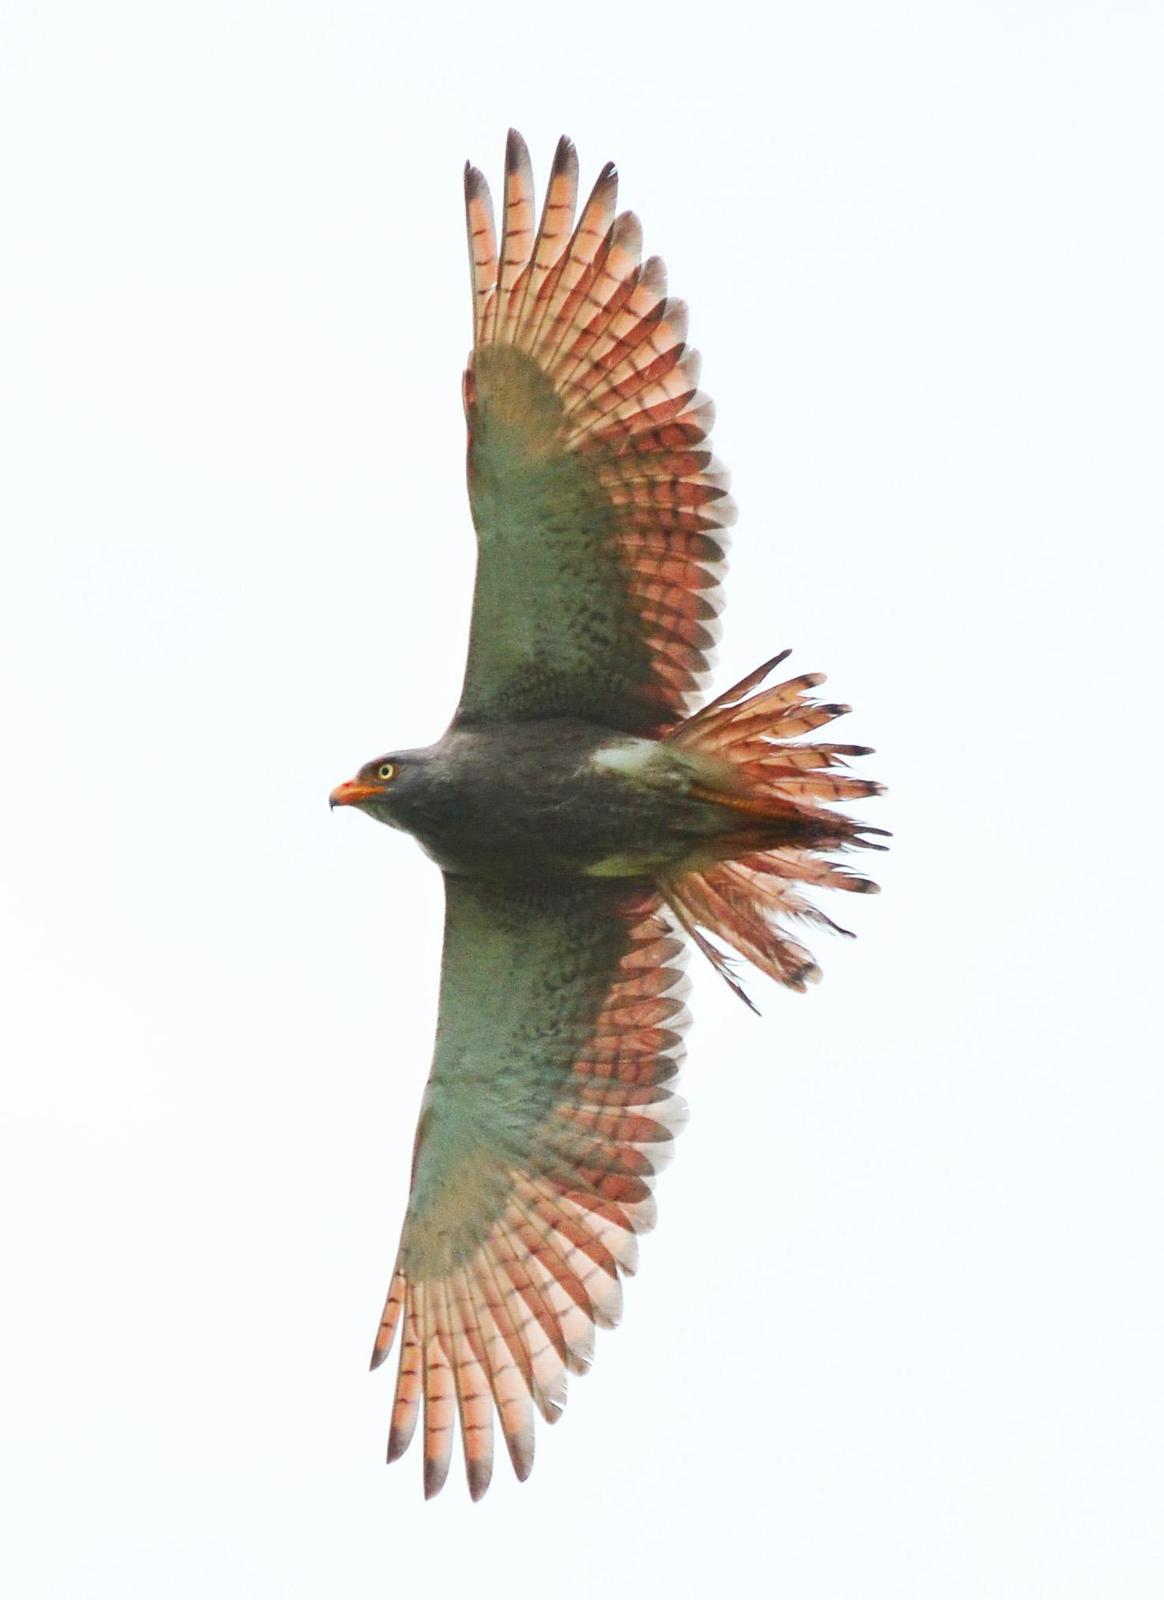 Rufous-winged Buzzard Photo by Uthai Cheummarung